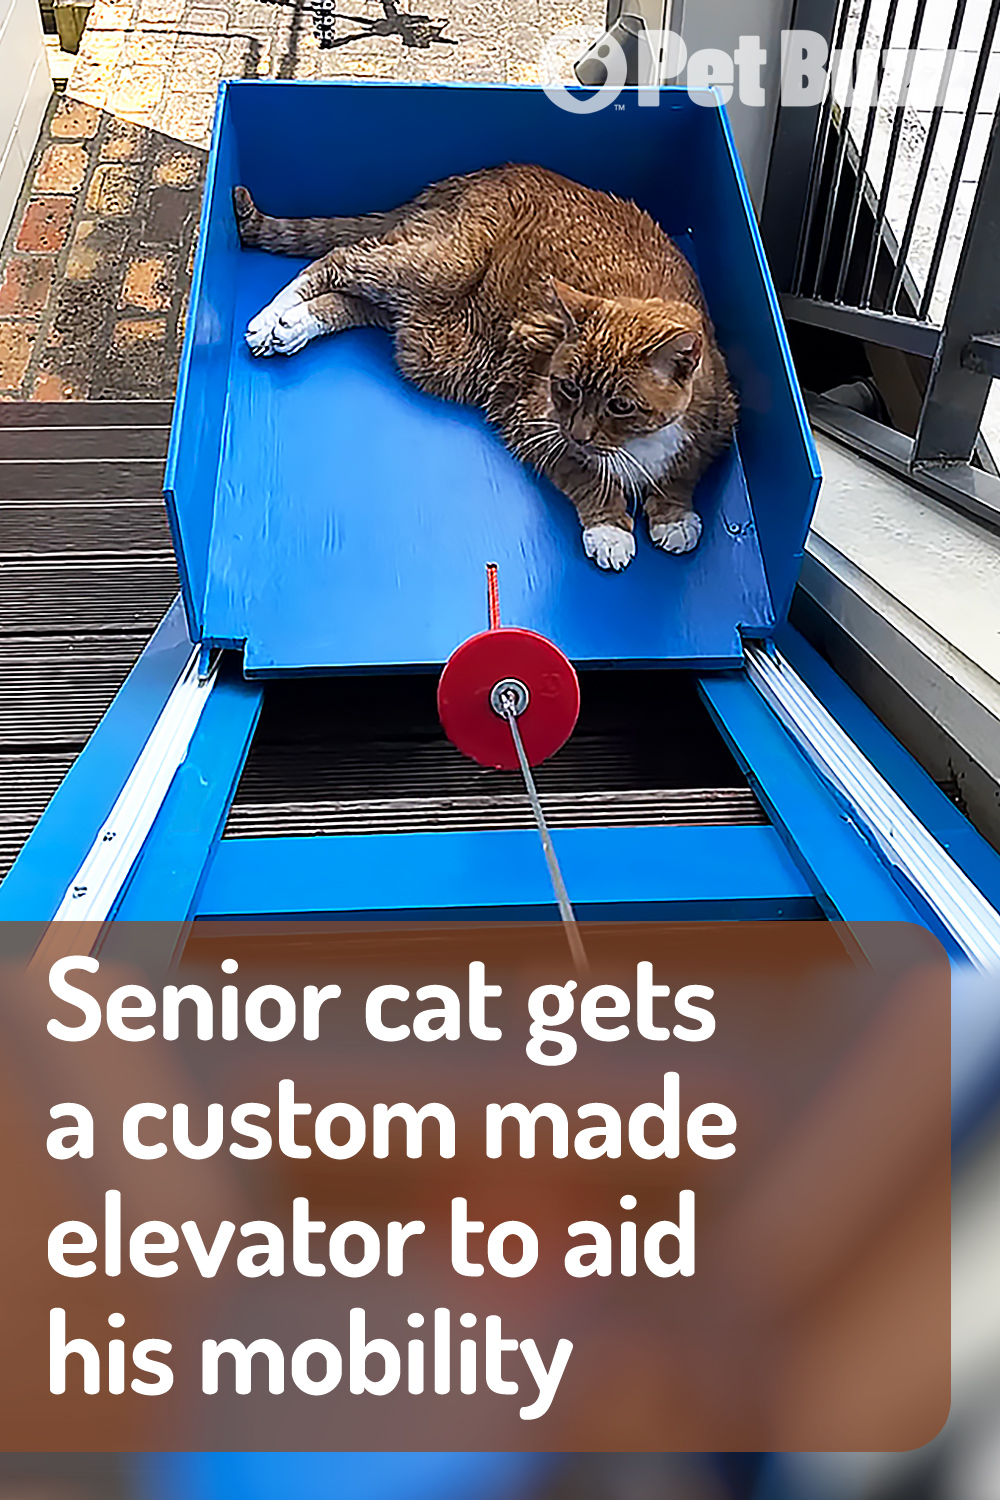 Senior cat gets a custom made elevator to aid his mobility